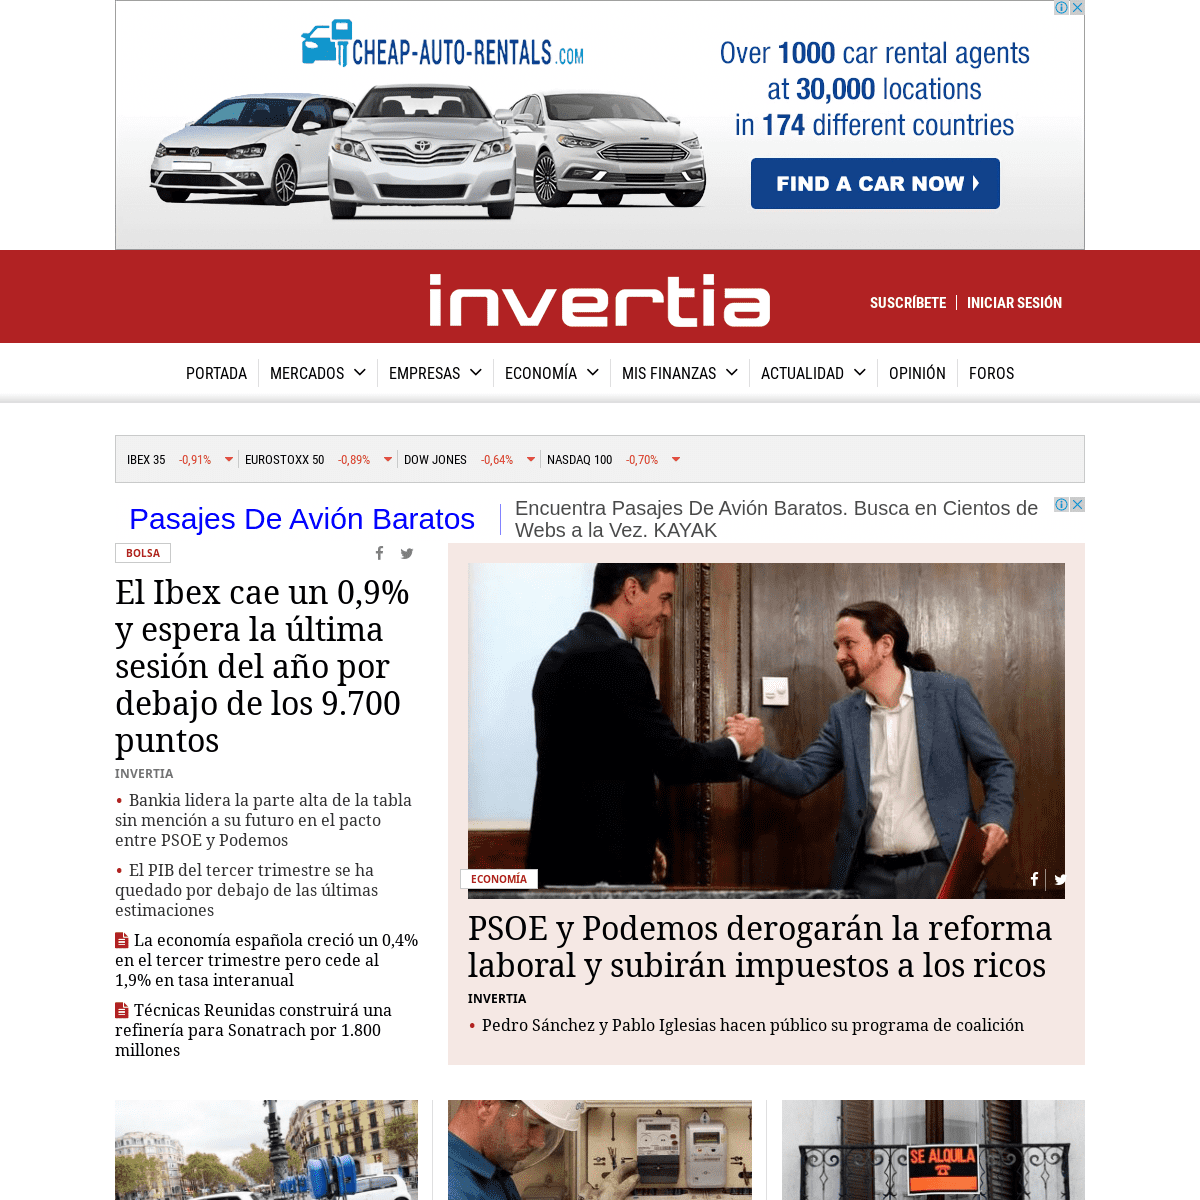 A complete backup of invertia.com